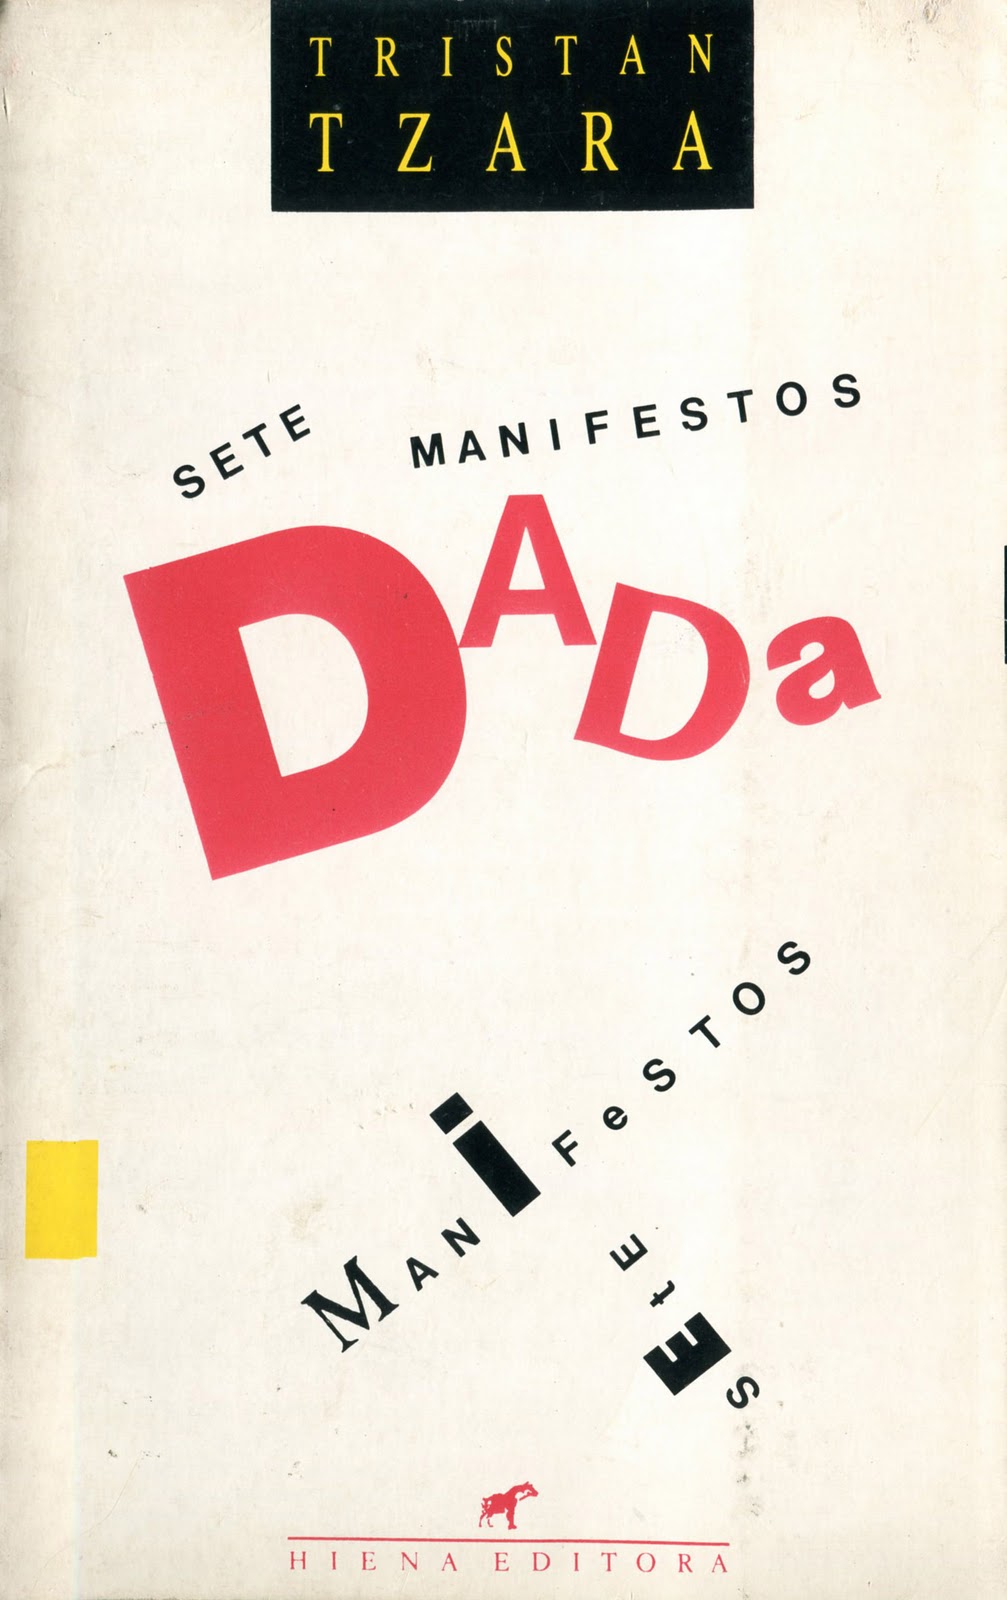 Dada, Dadaism | The Global Sixties